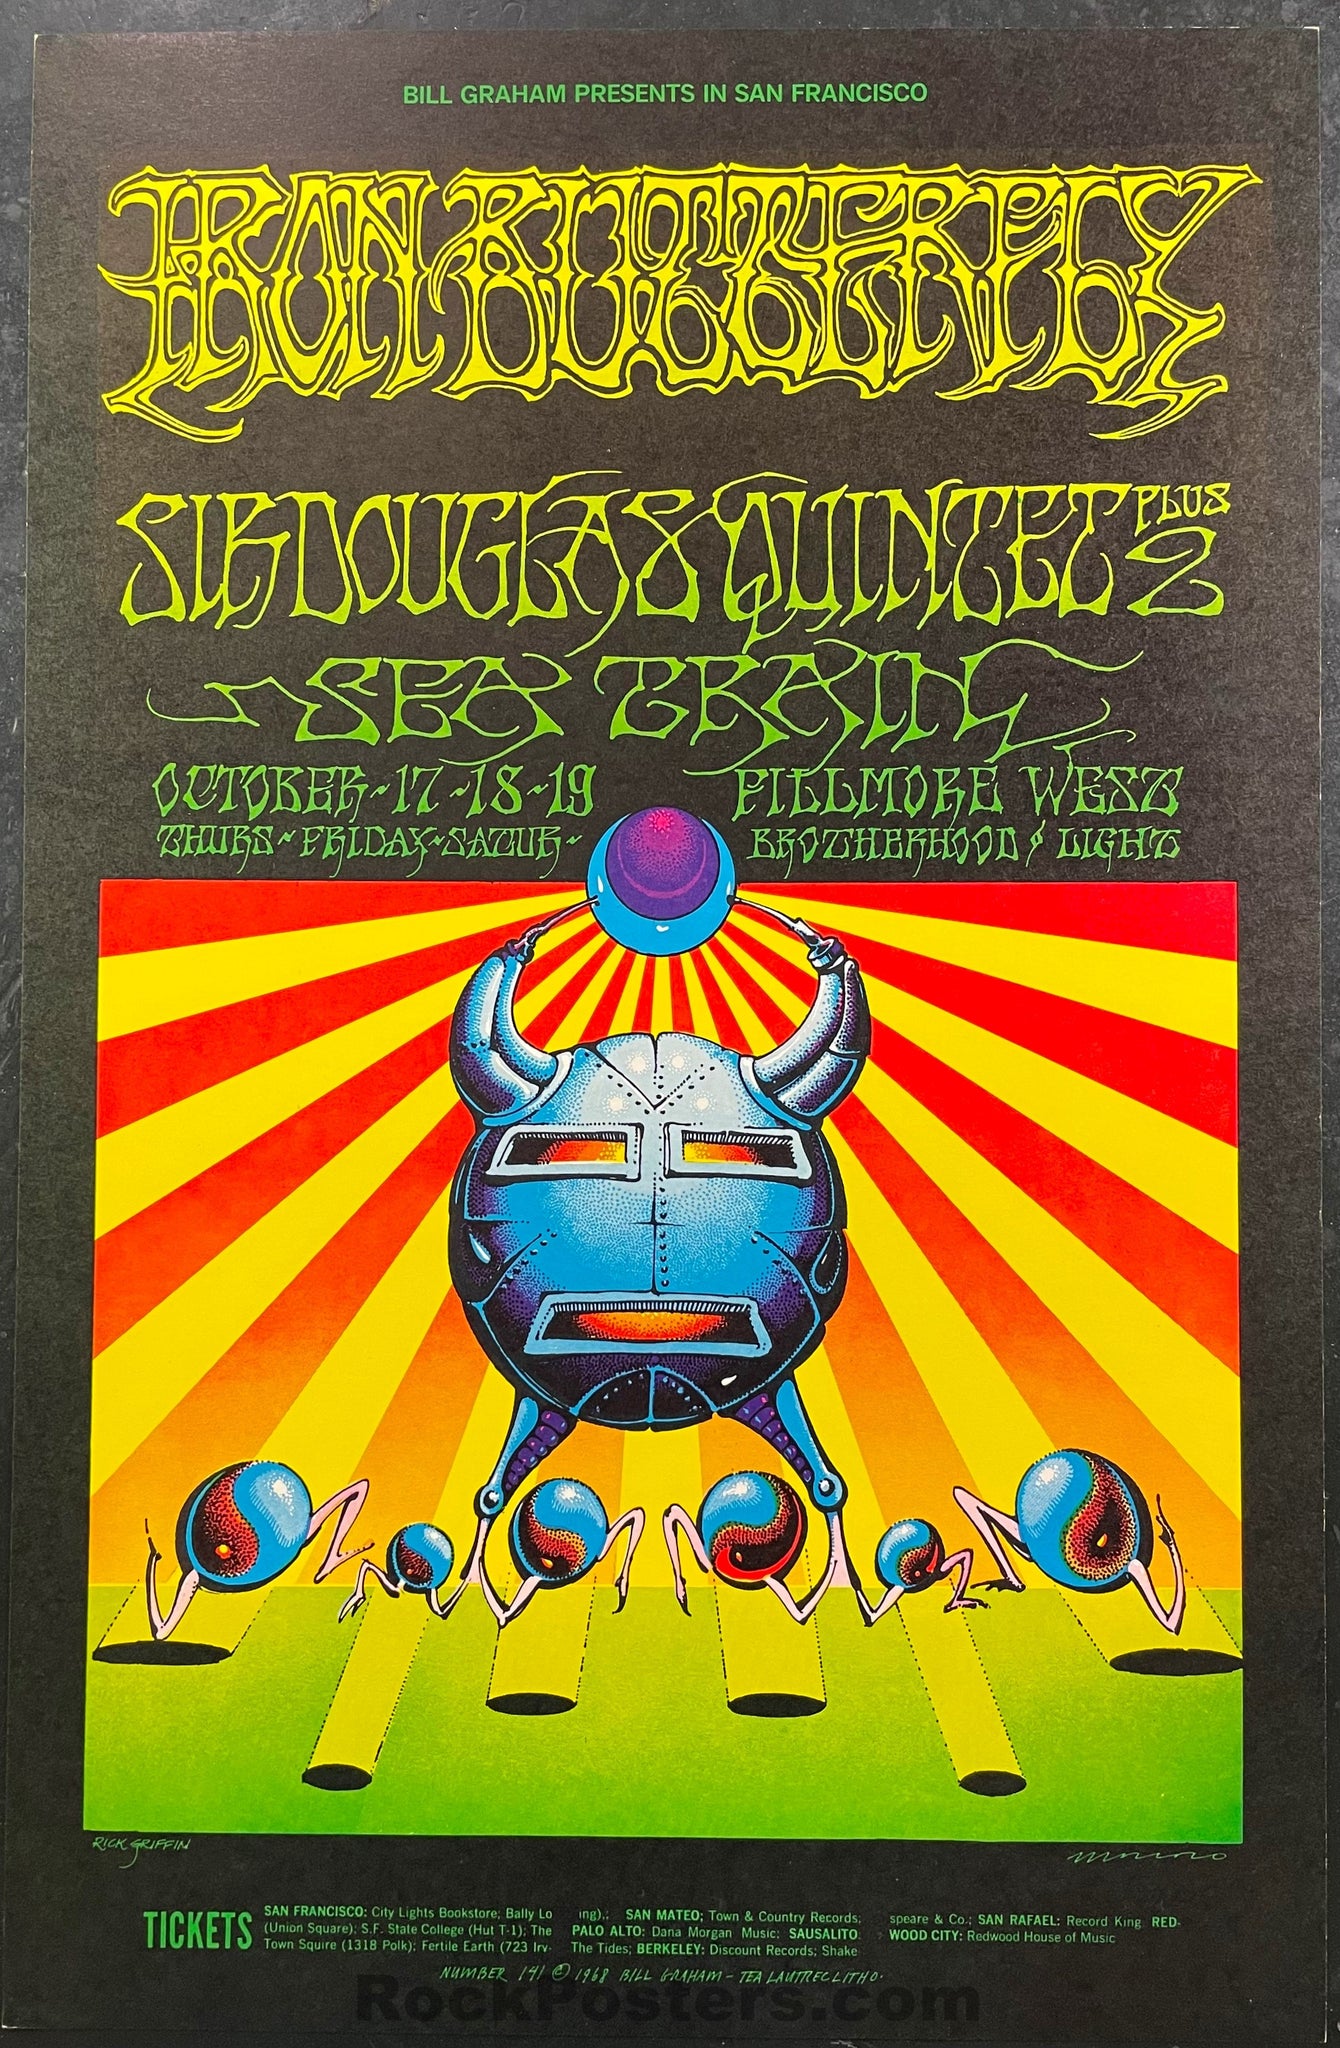 AUCTION - BG-141 - Iron Butterfly Rick Griffin - 1968 Poster - Fillmore Auditorium - Near Mint